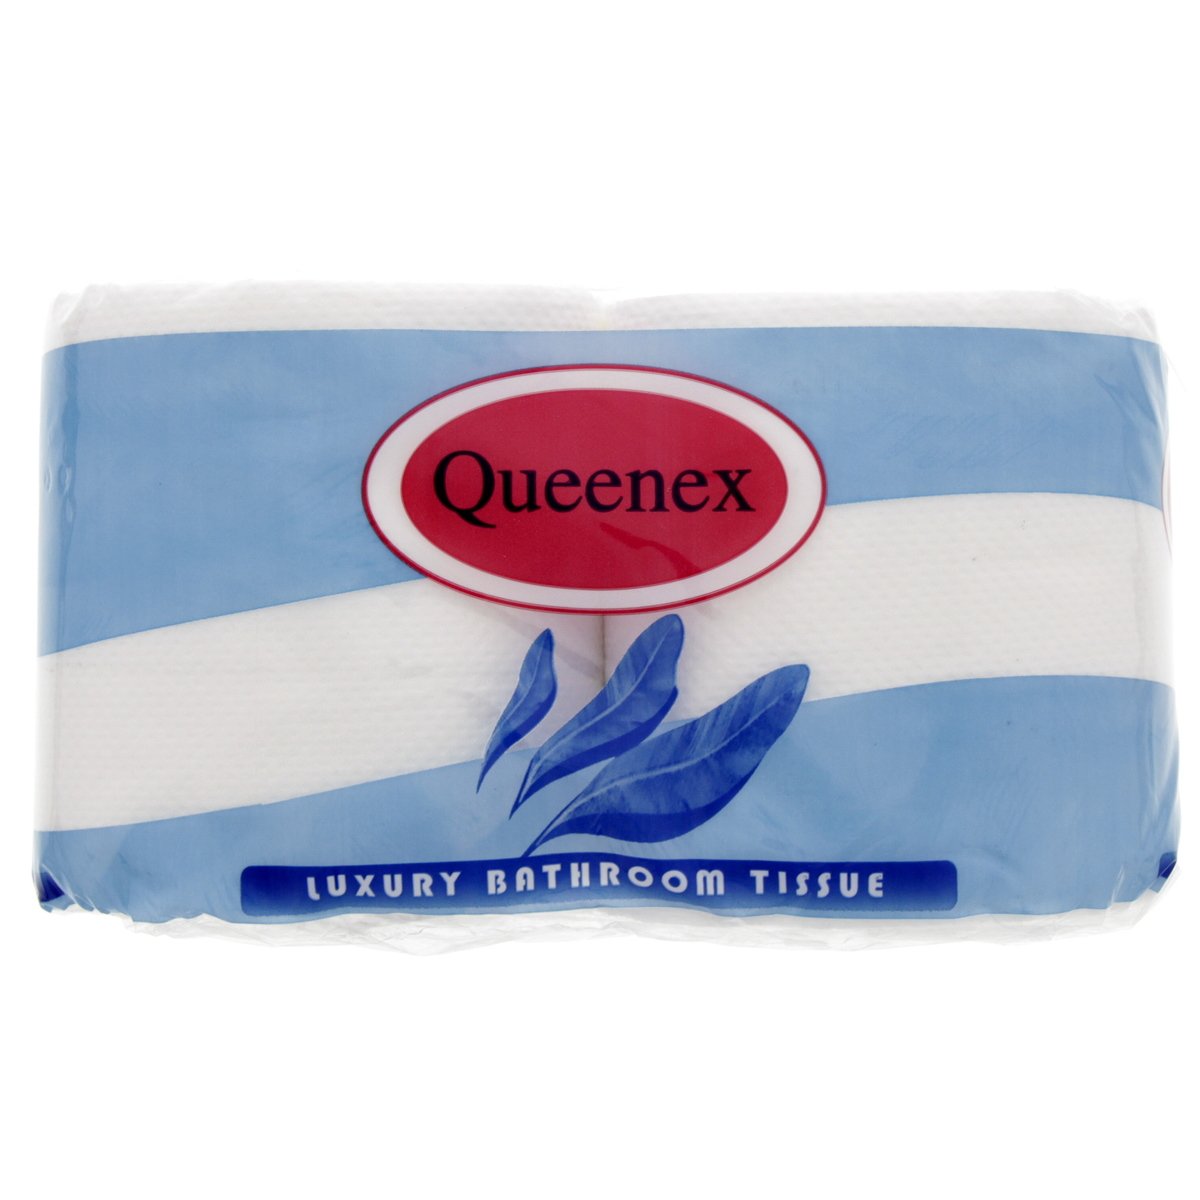 Queenex Luxury Bathroom Tissue 2 Rolls 200 Sheets